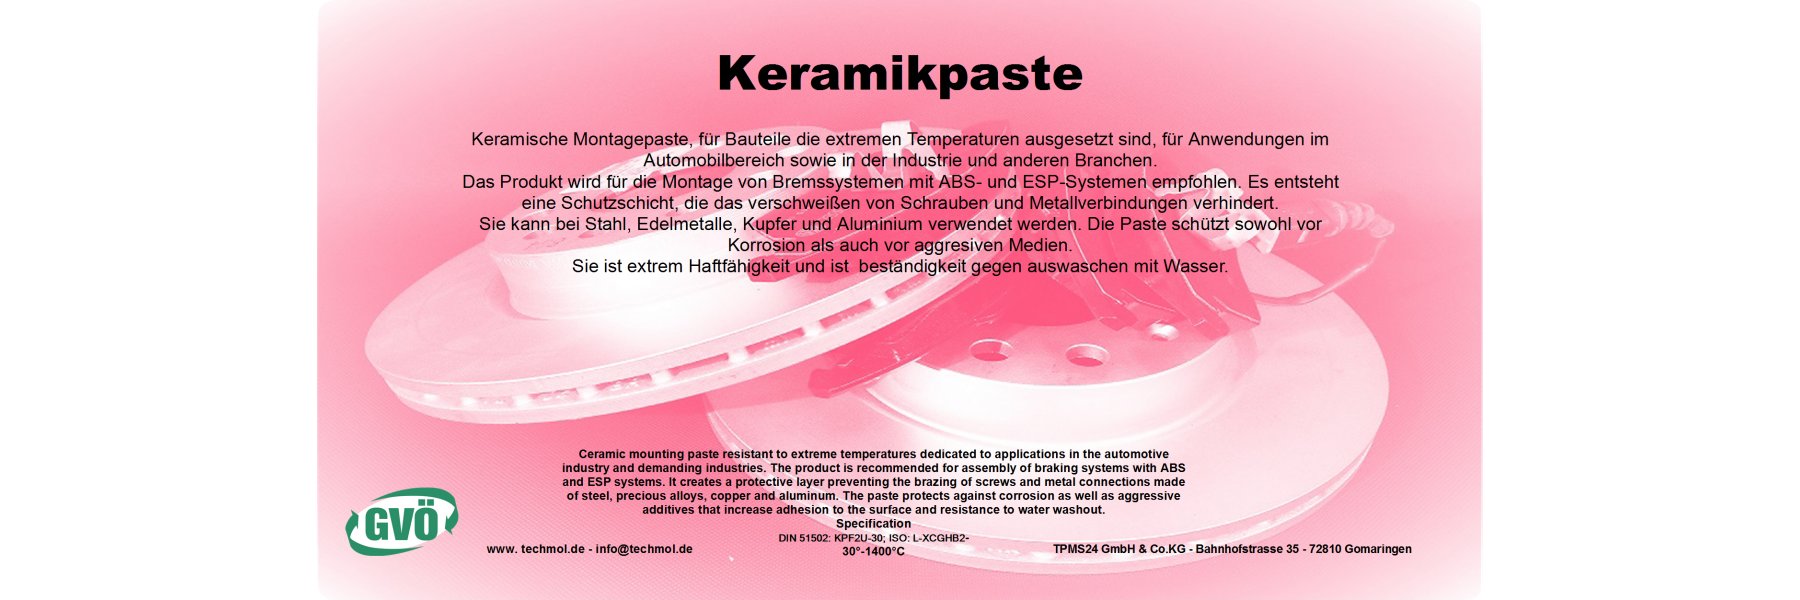 https://techmol.de/media/image/category/1302/lg/keramikpaste-fuer-bremsen-bei-abs-und-esp-empfohlen.jpg